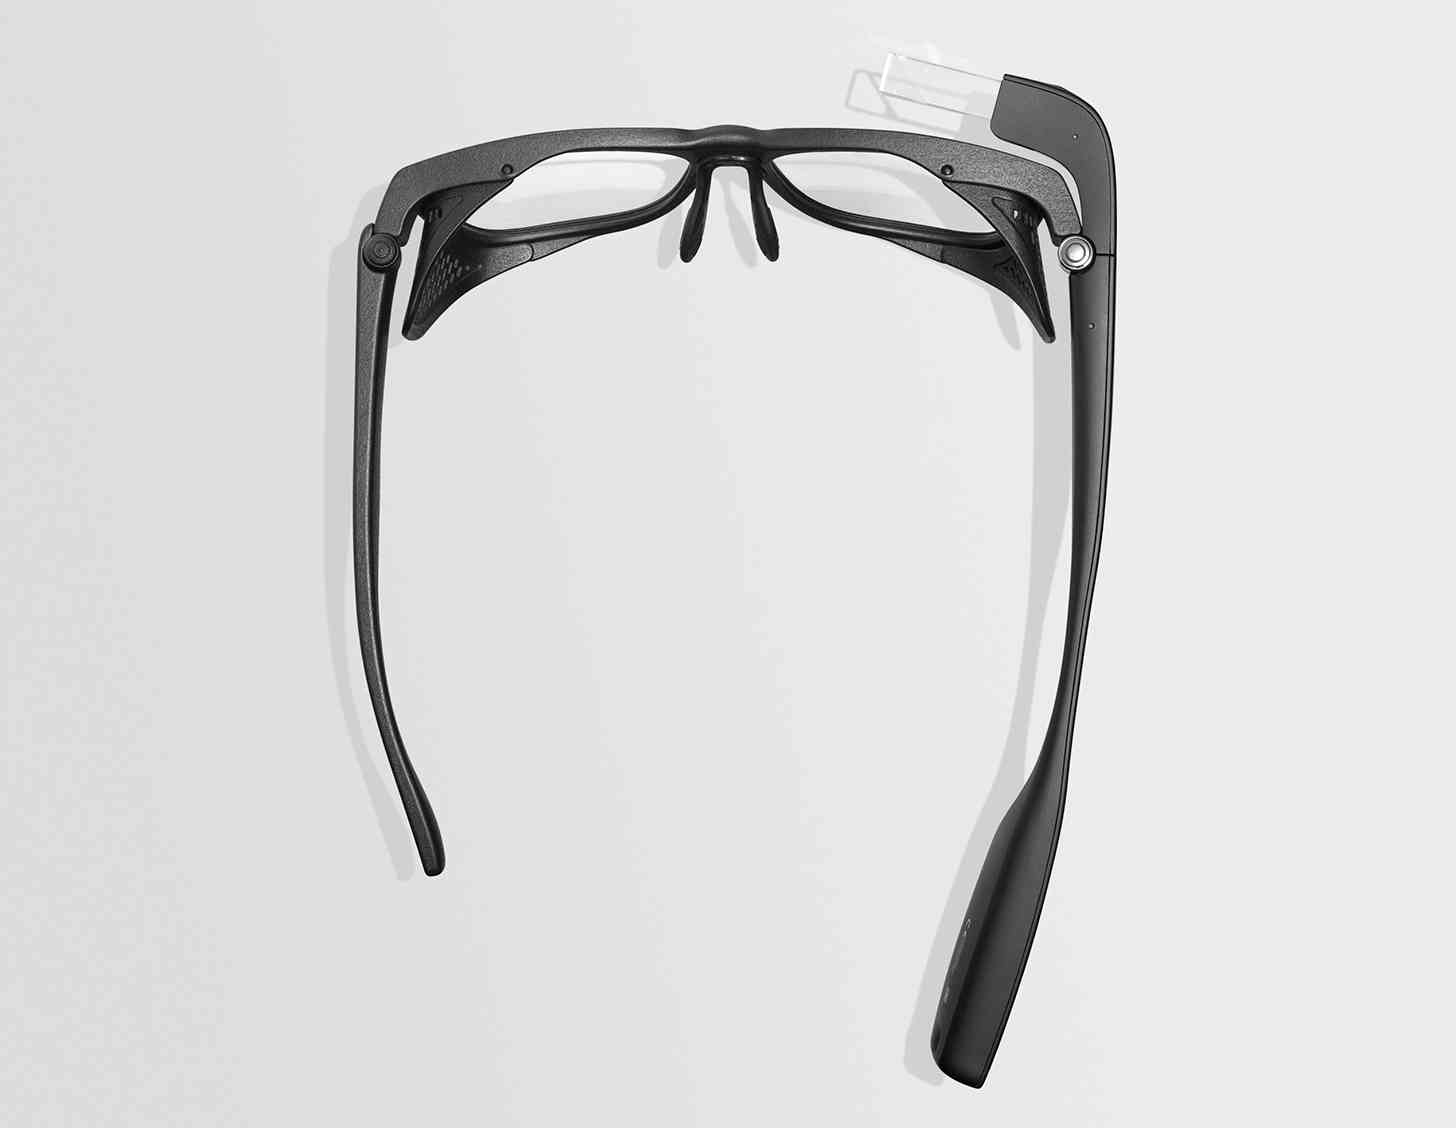 Google Glass Enterprise Edition 2 top view